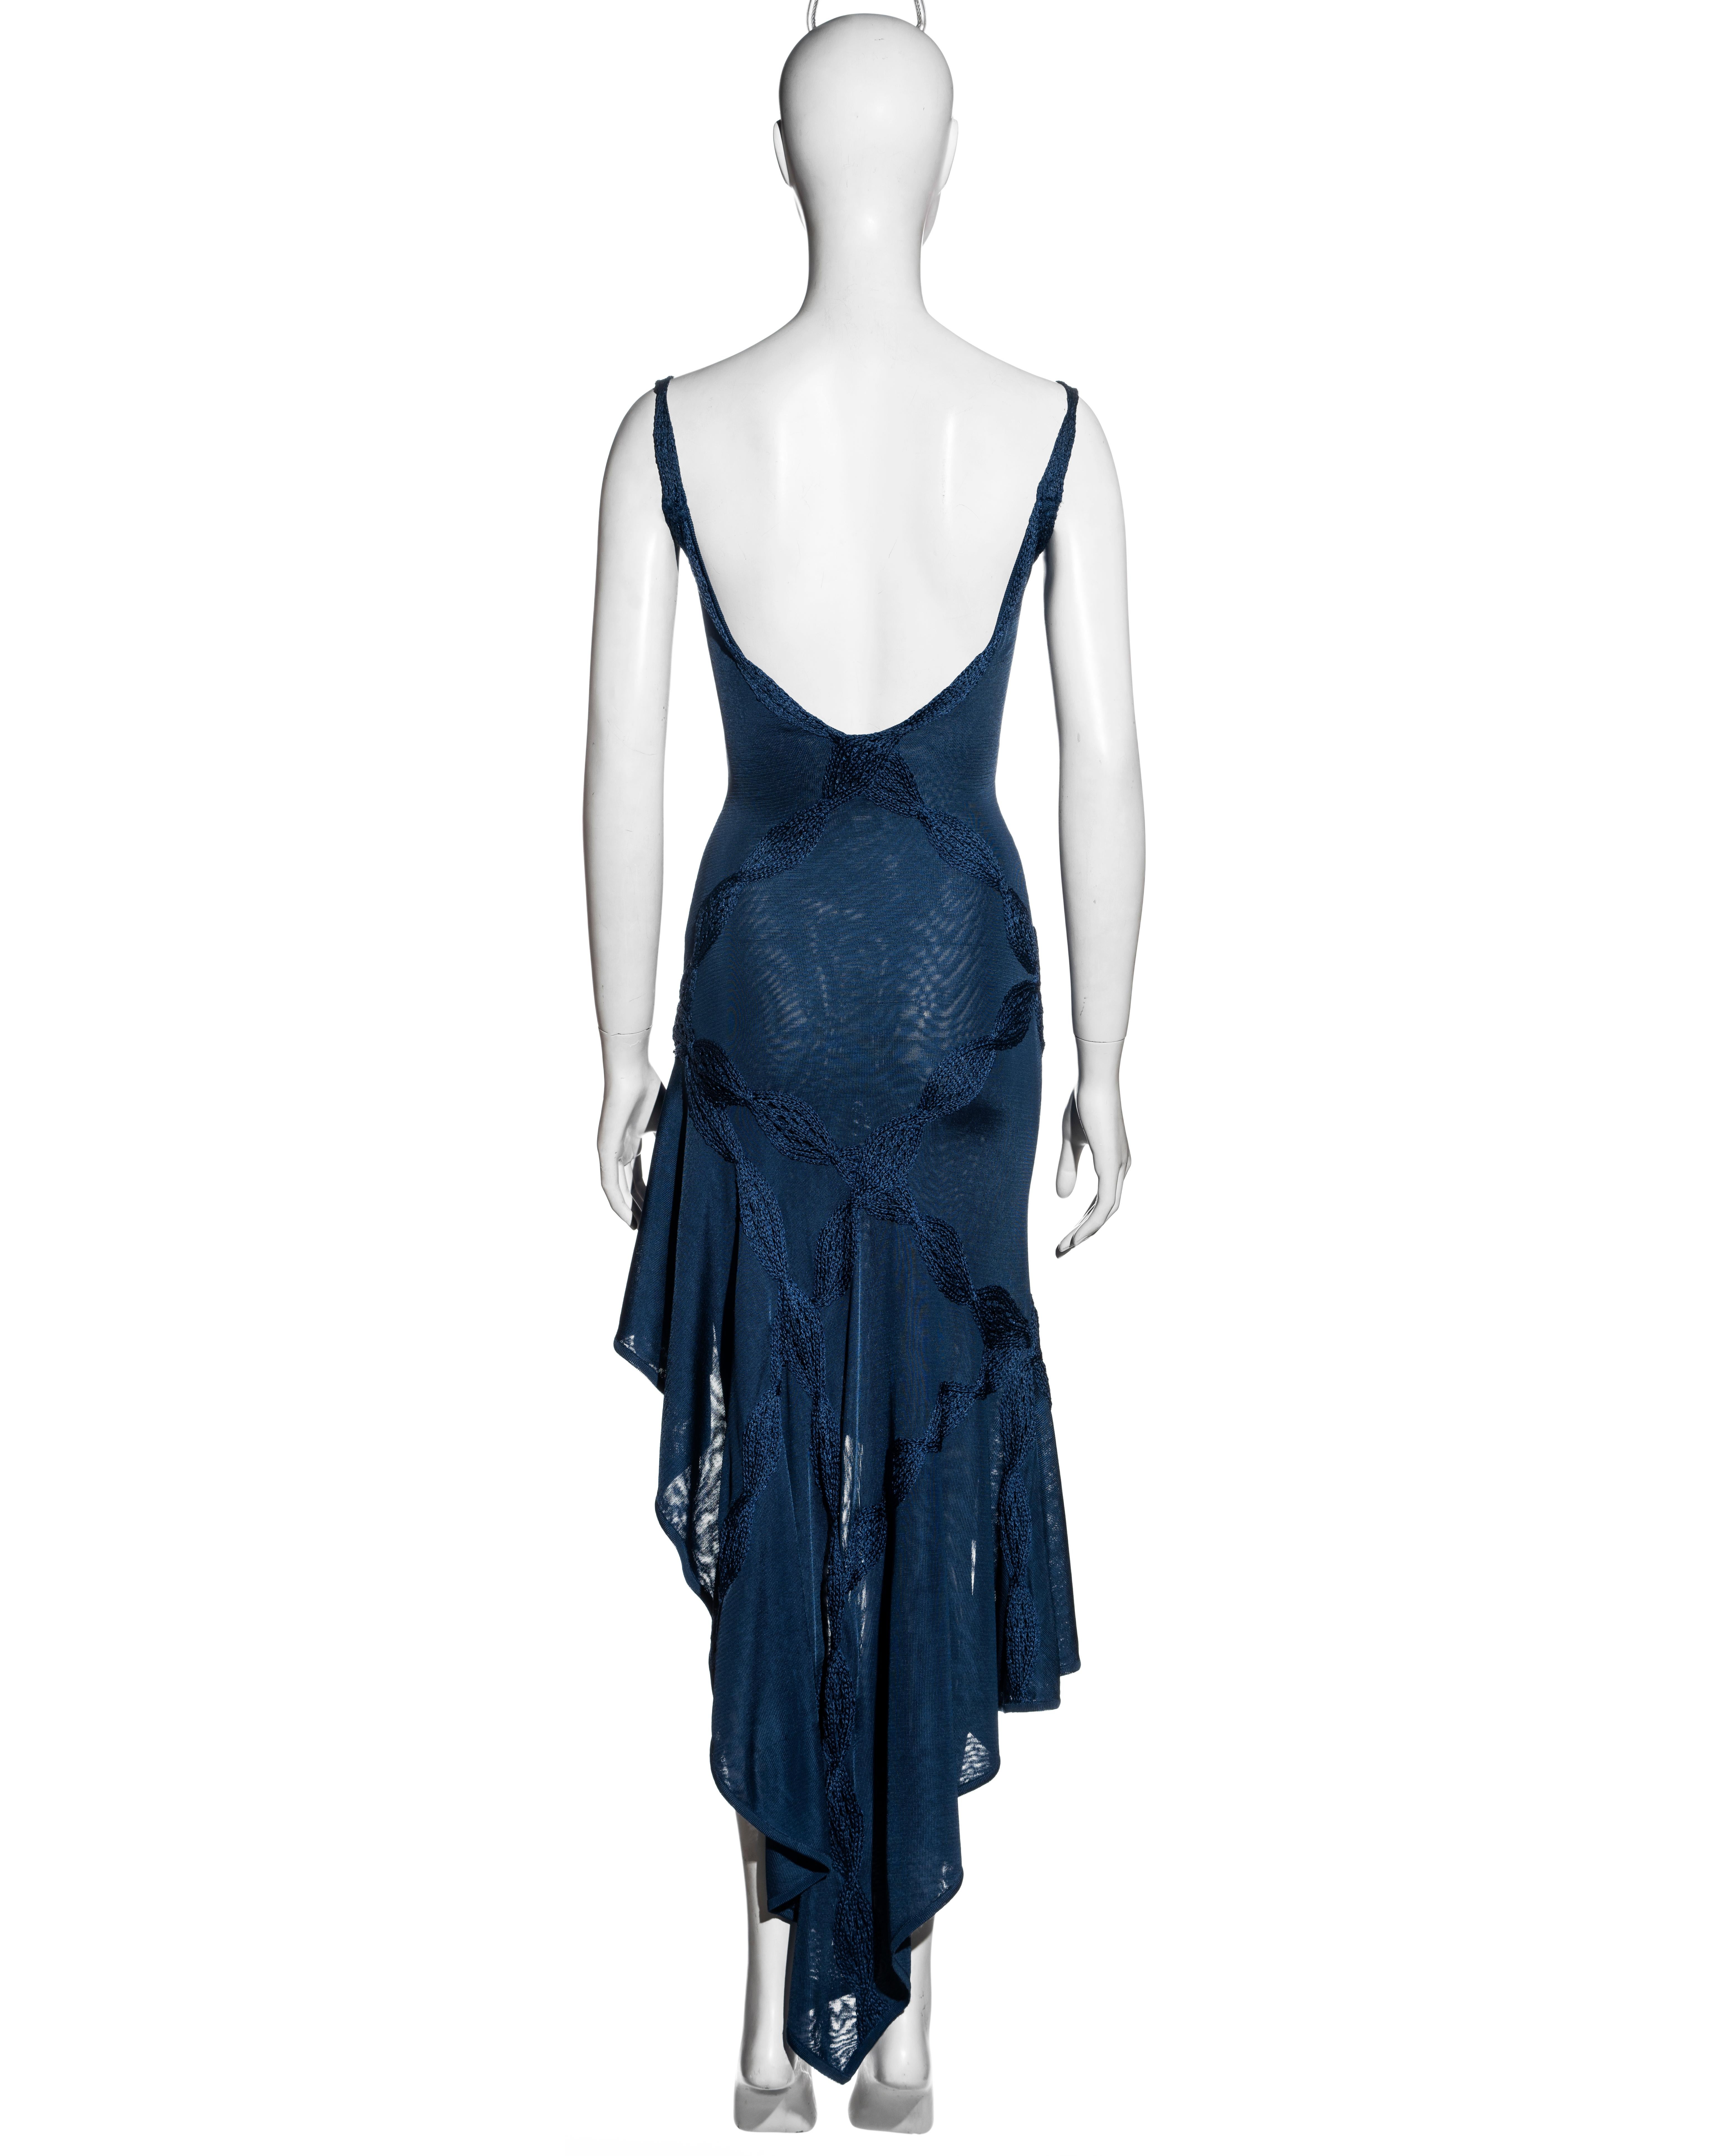 Women's Christian Dior by John Galliano blue bias-cut knit dress with cowl neck, ss 2001